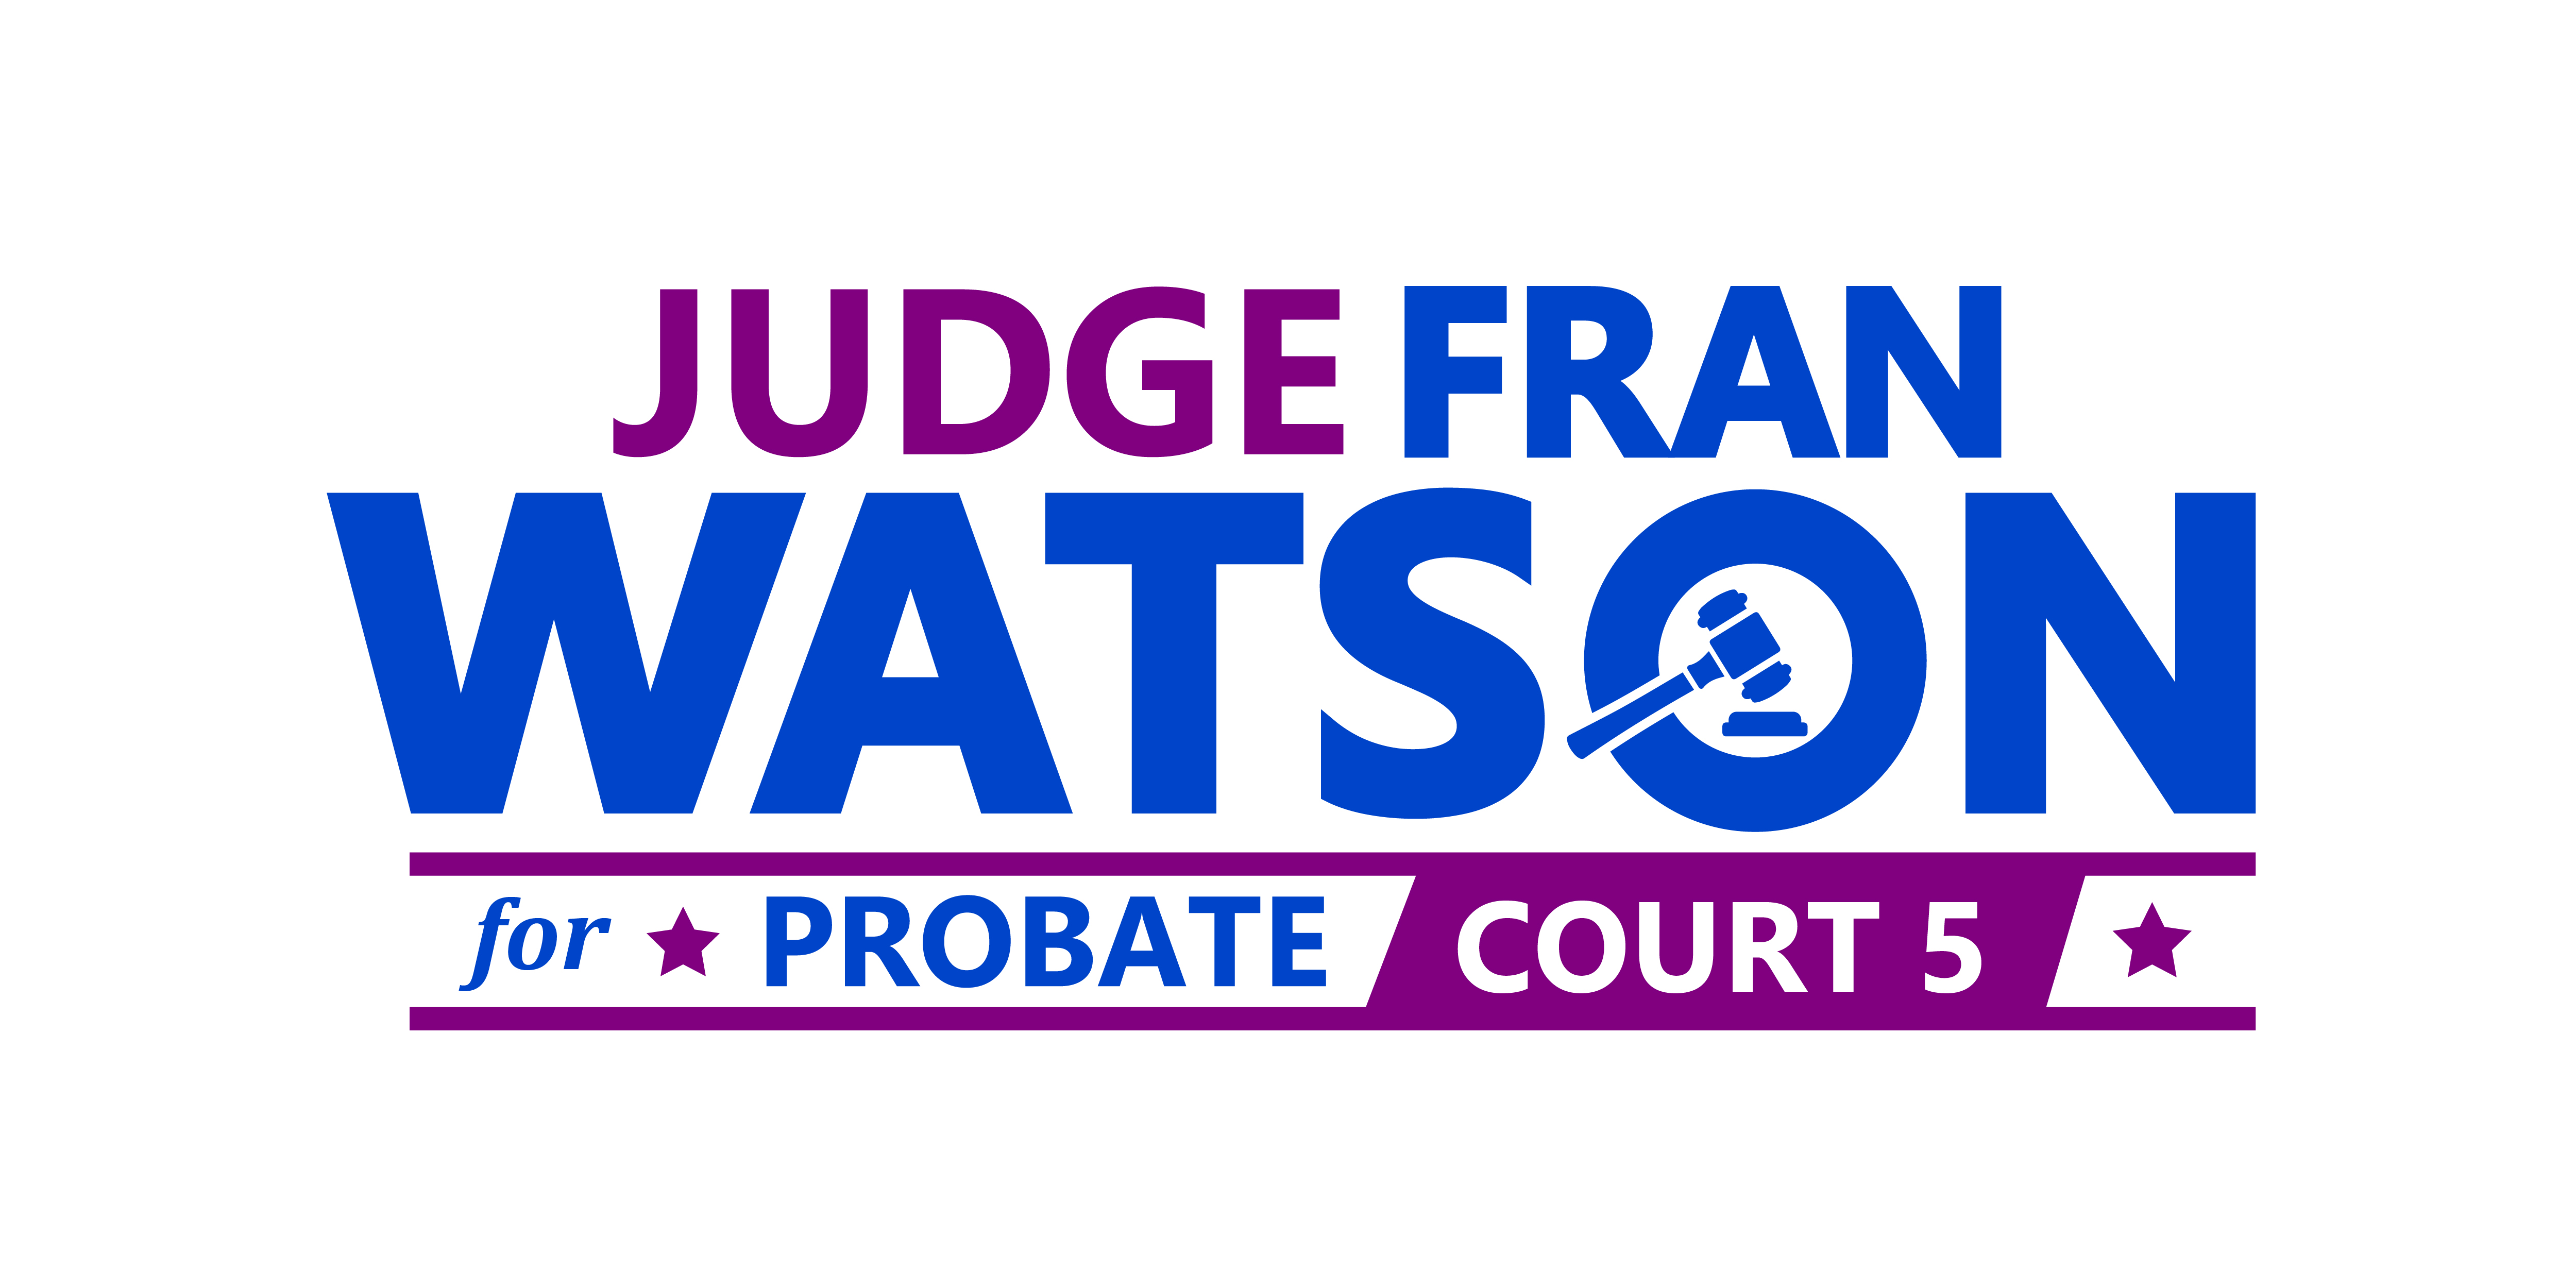 Fran Watson for Probate Court 5 logo